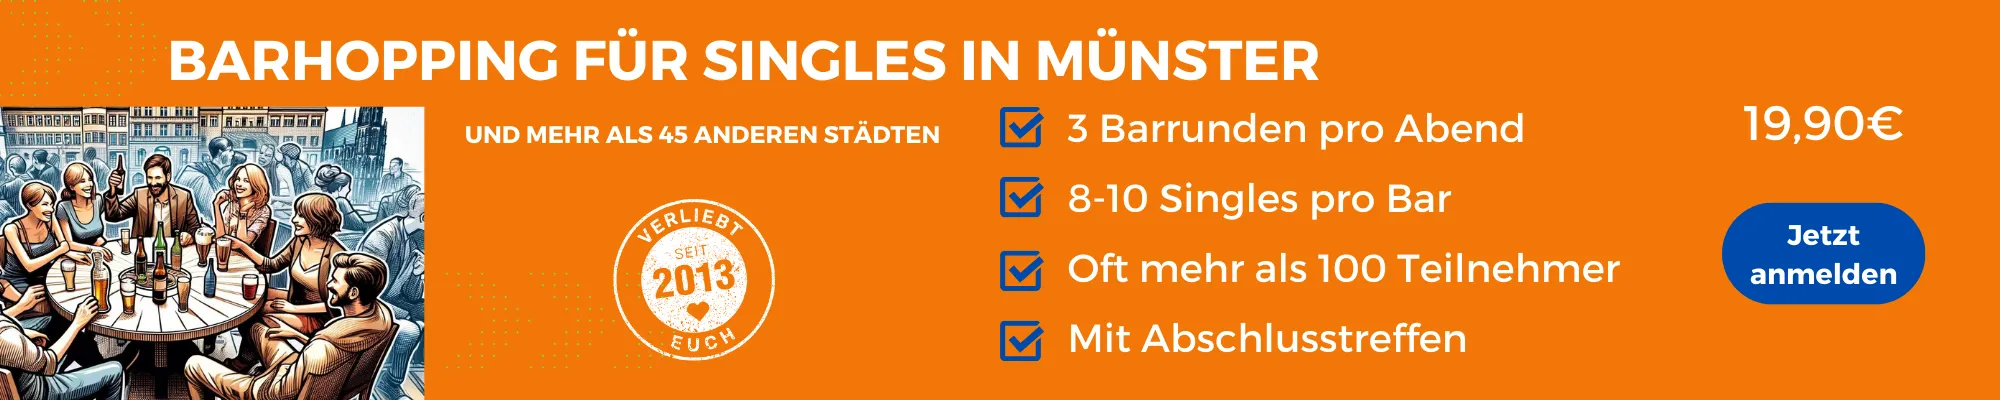 Face to Face Münster, Barhopping für Singles in Münster